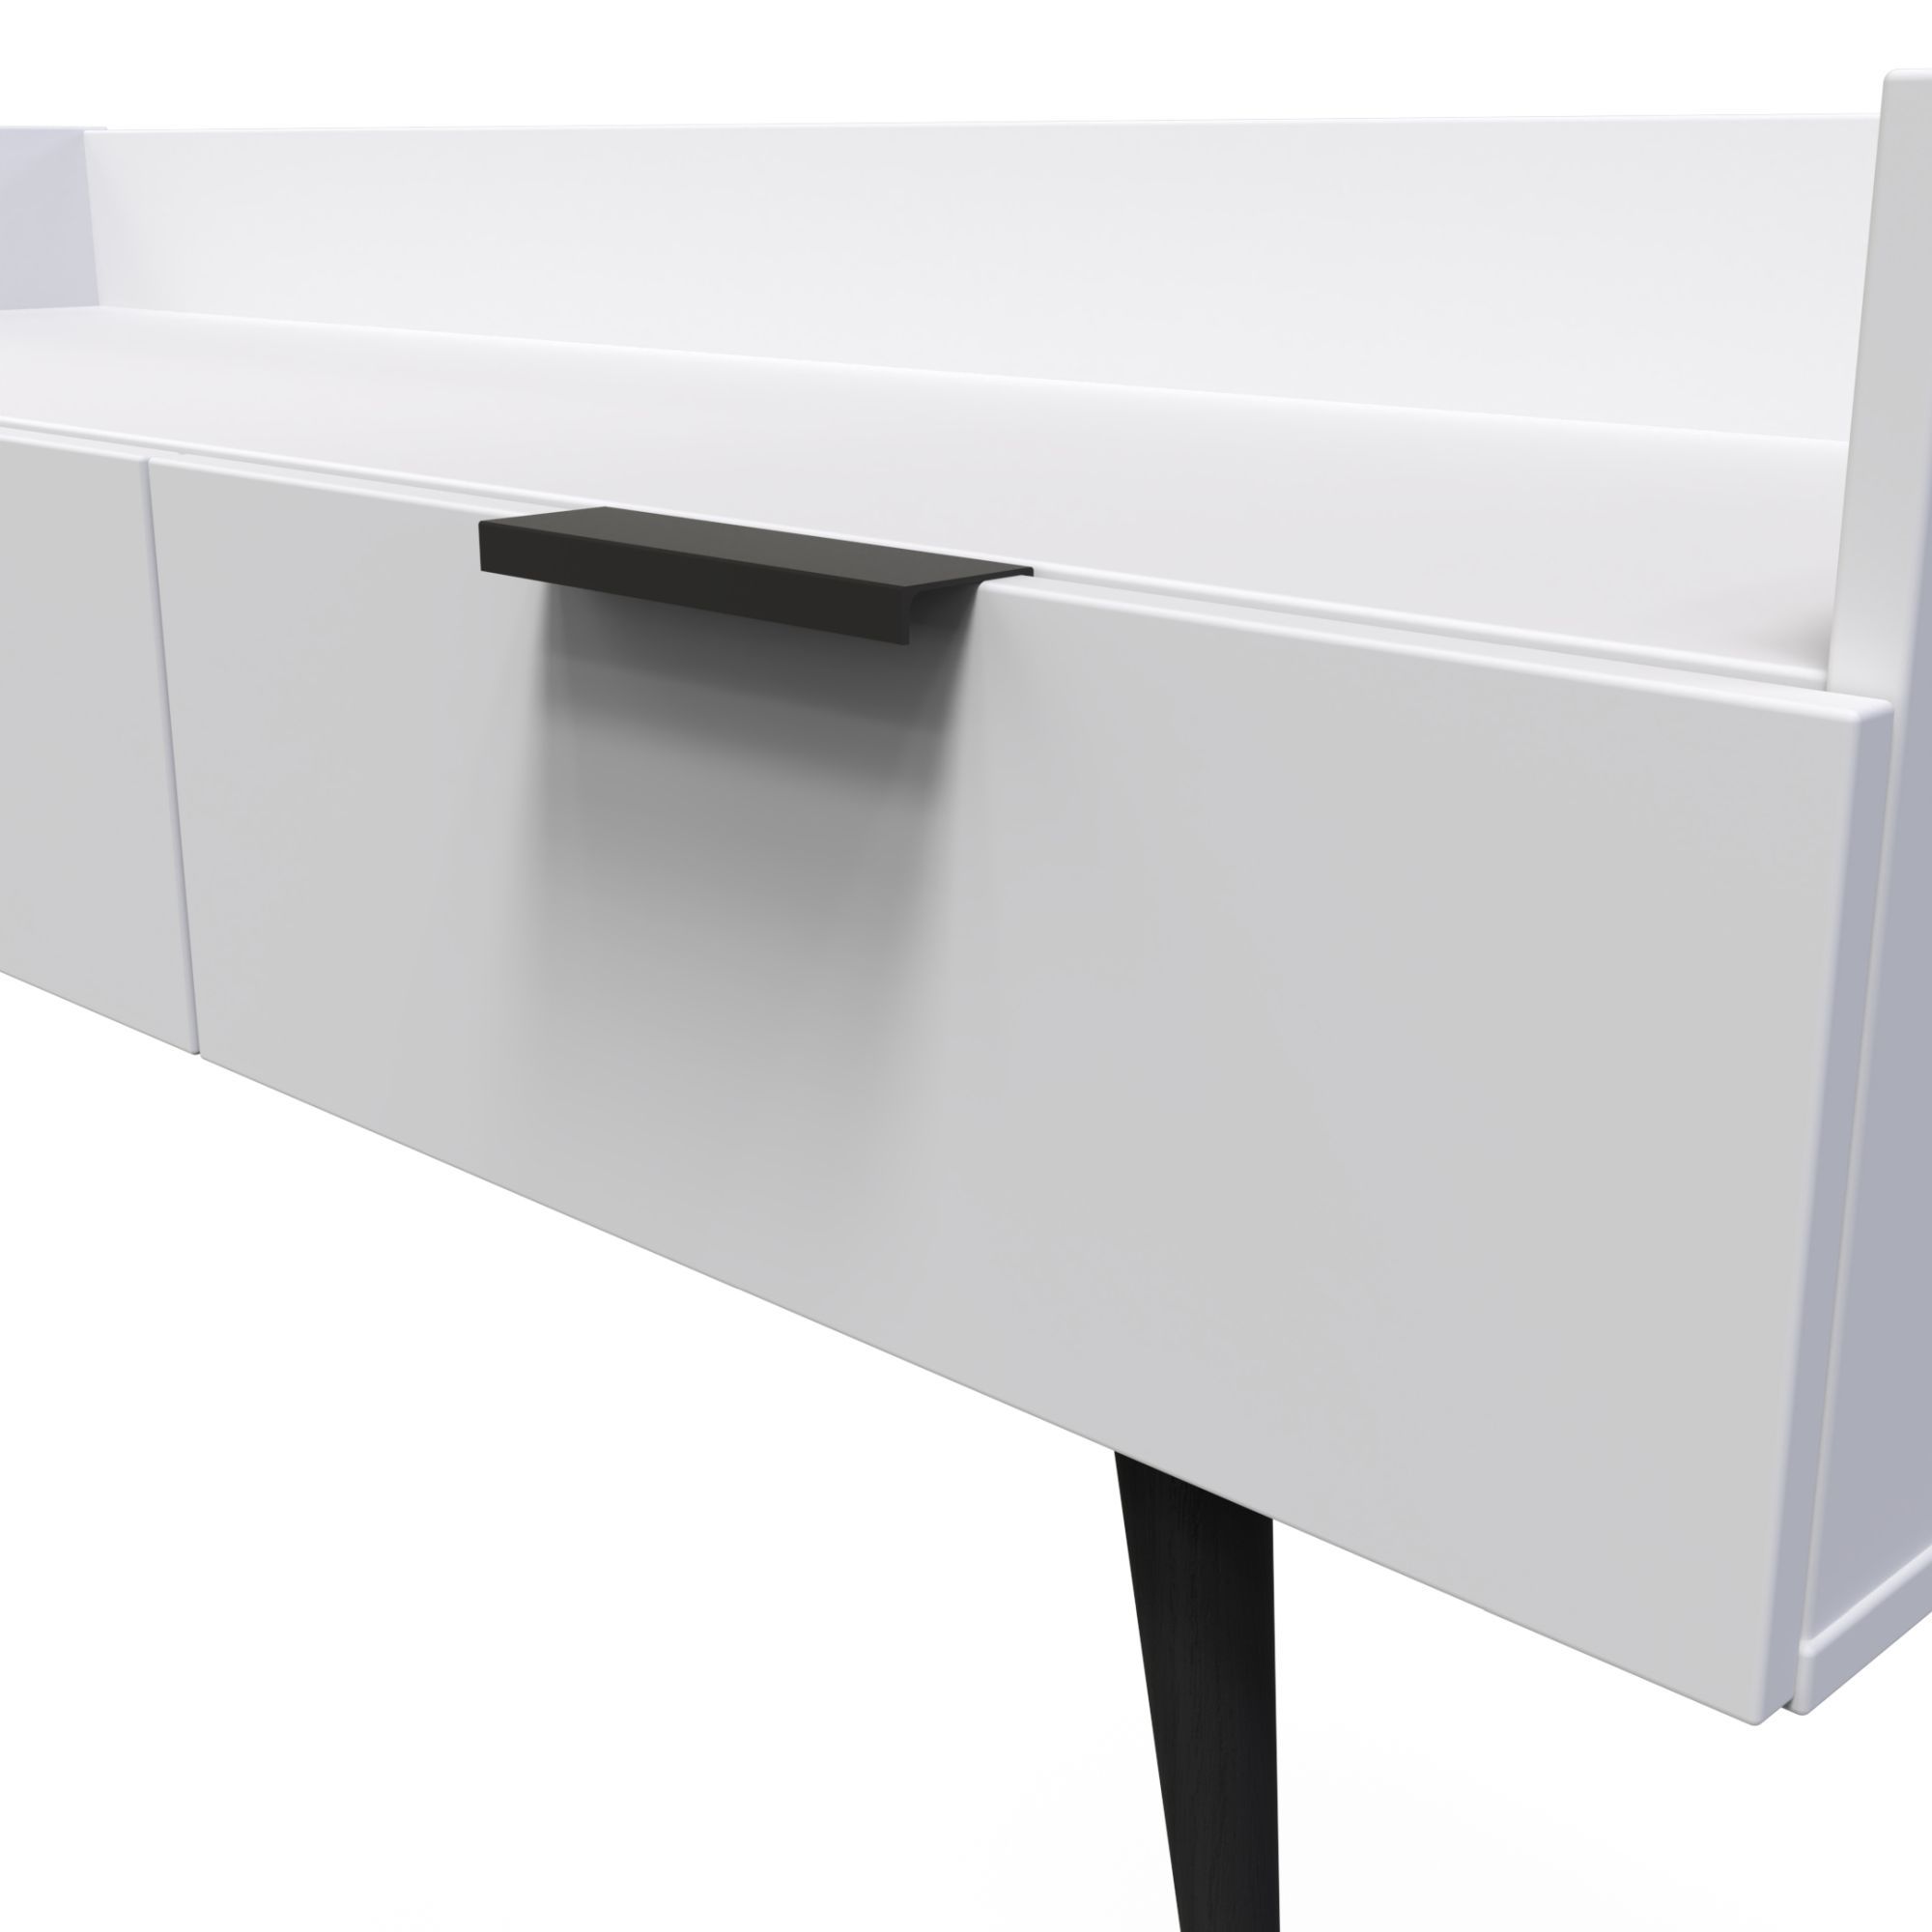 Hong Kong Ready assembled Matt grey Media unit with 2 drawers, (H)128cm x (W)51.5cm x (D)39.5cm